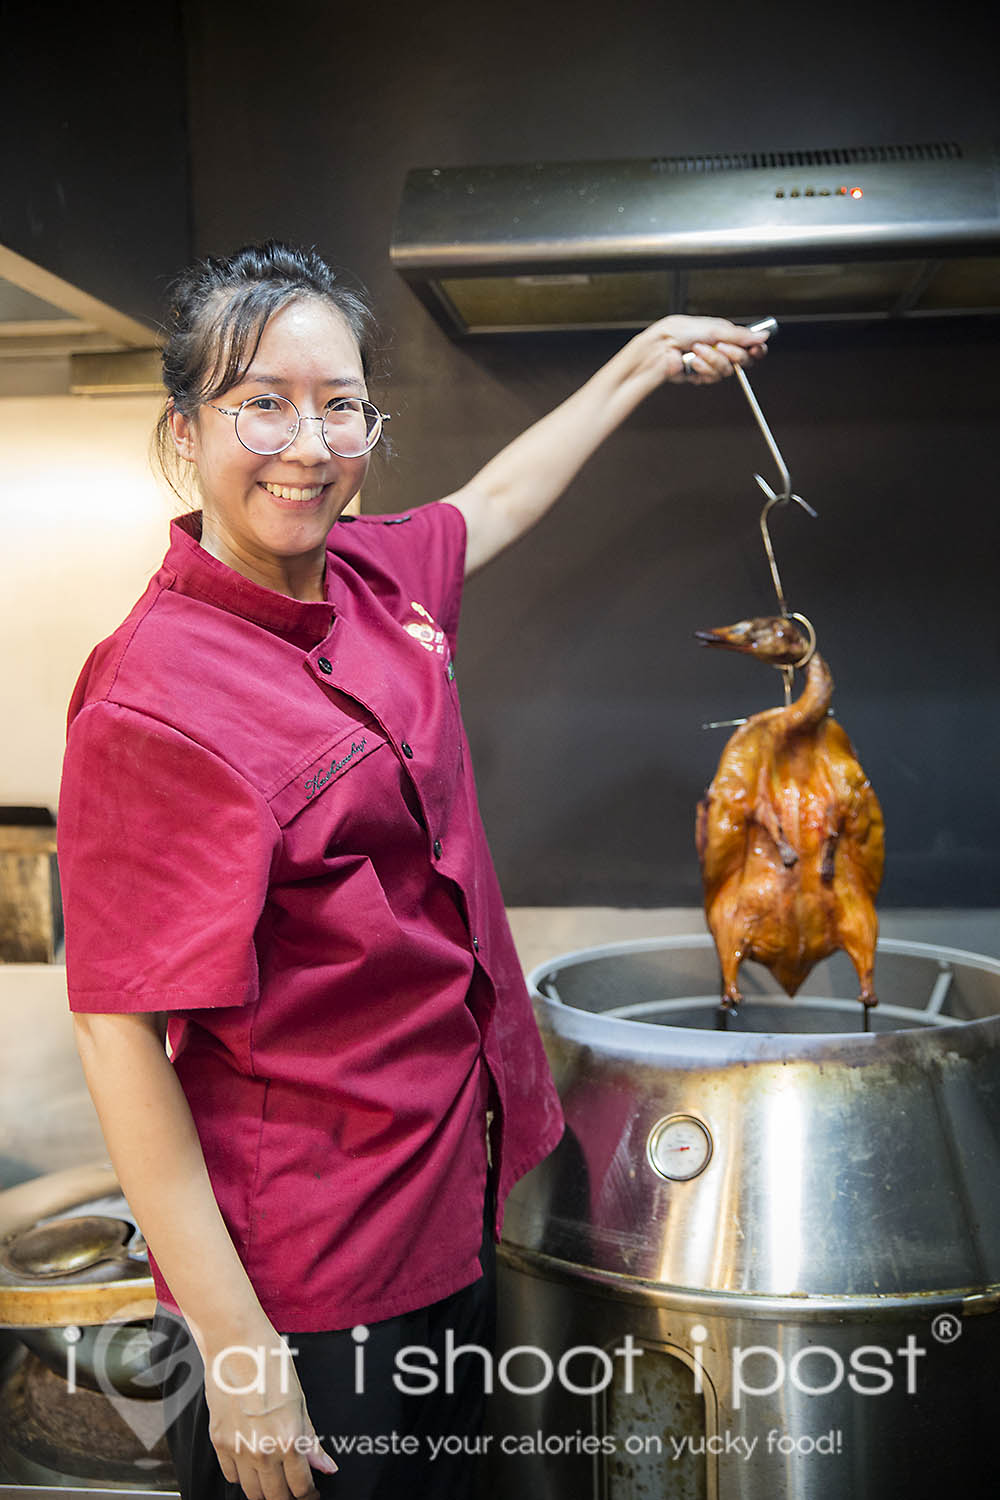 Eat 3 Cuts: Cantonese Roast featuring Pipa Duck! - ieatishootipost